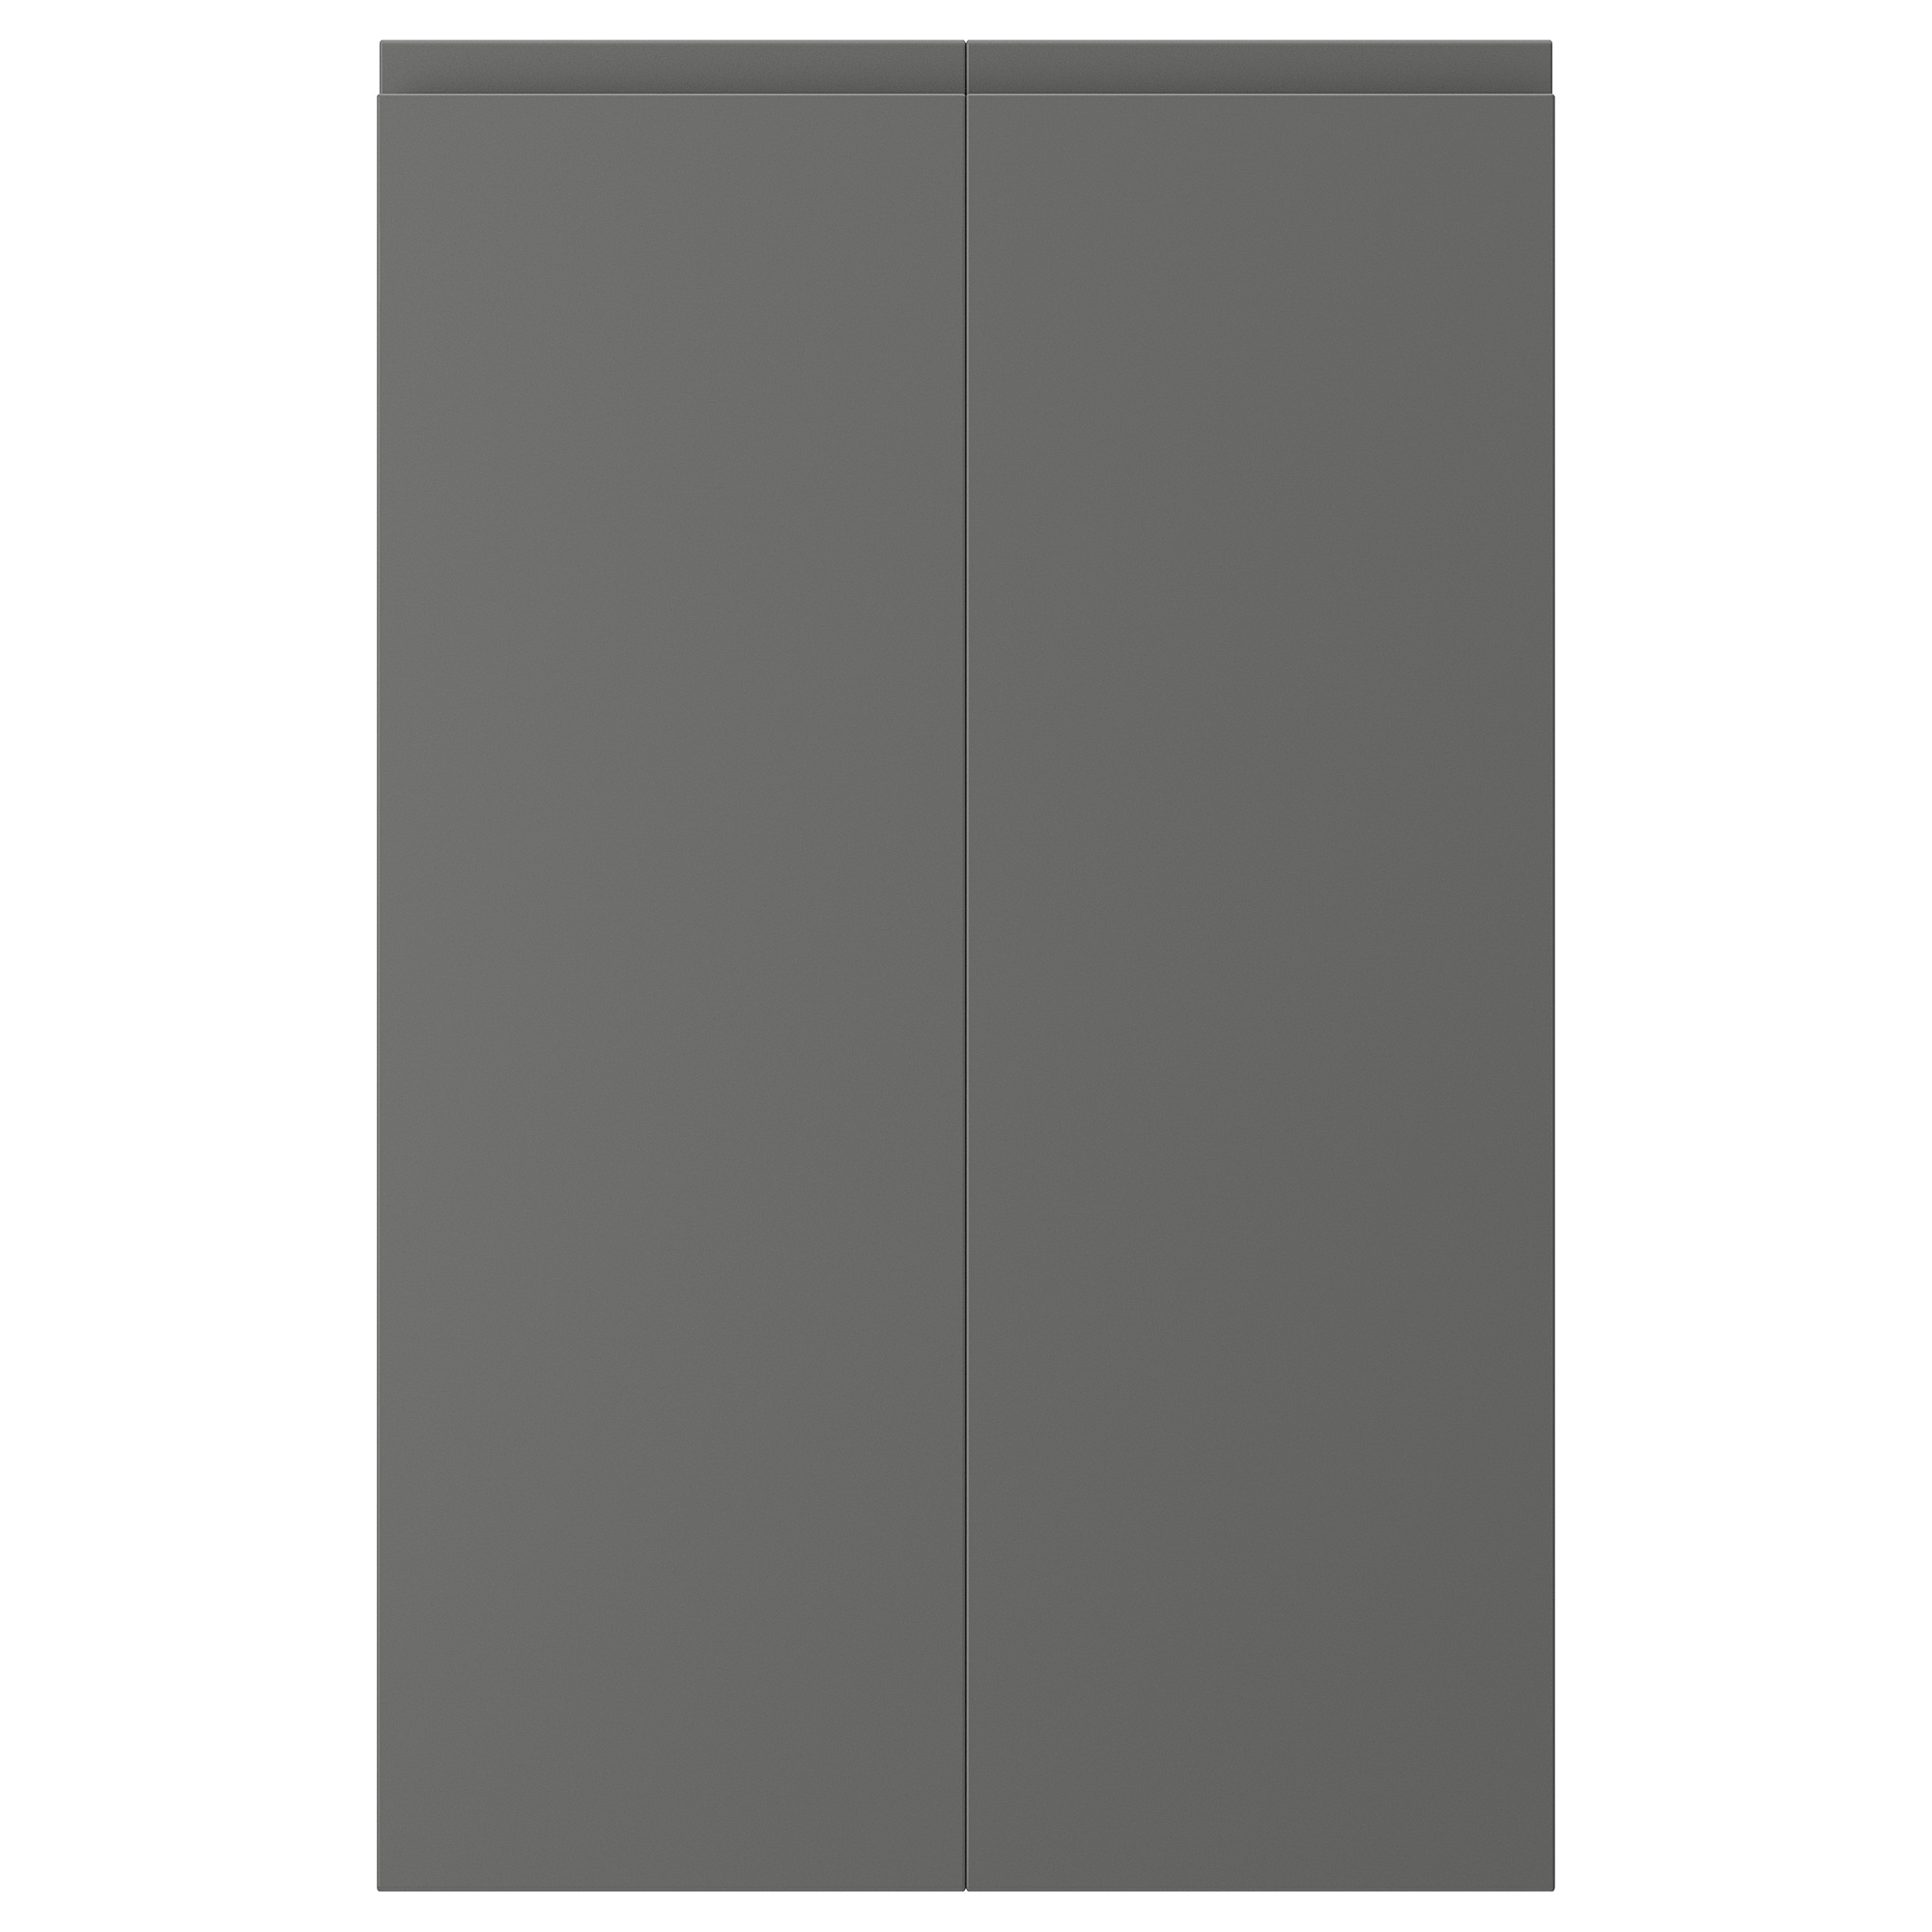 VOXTORP 2-p door f corner base cabinet set